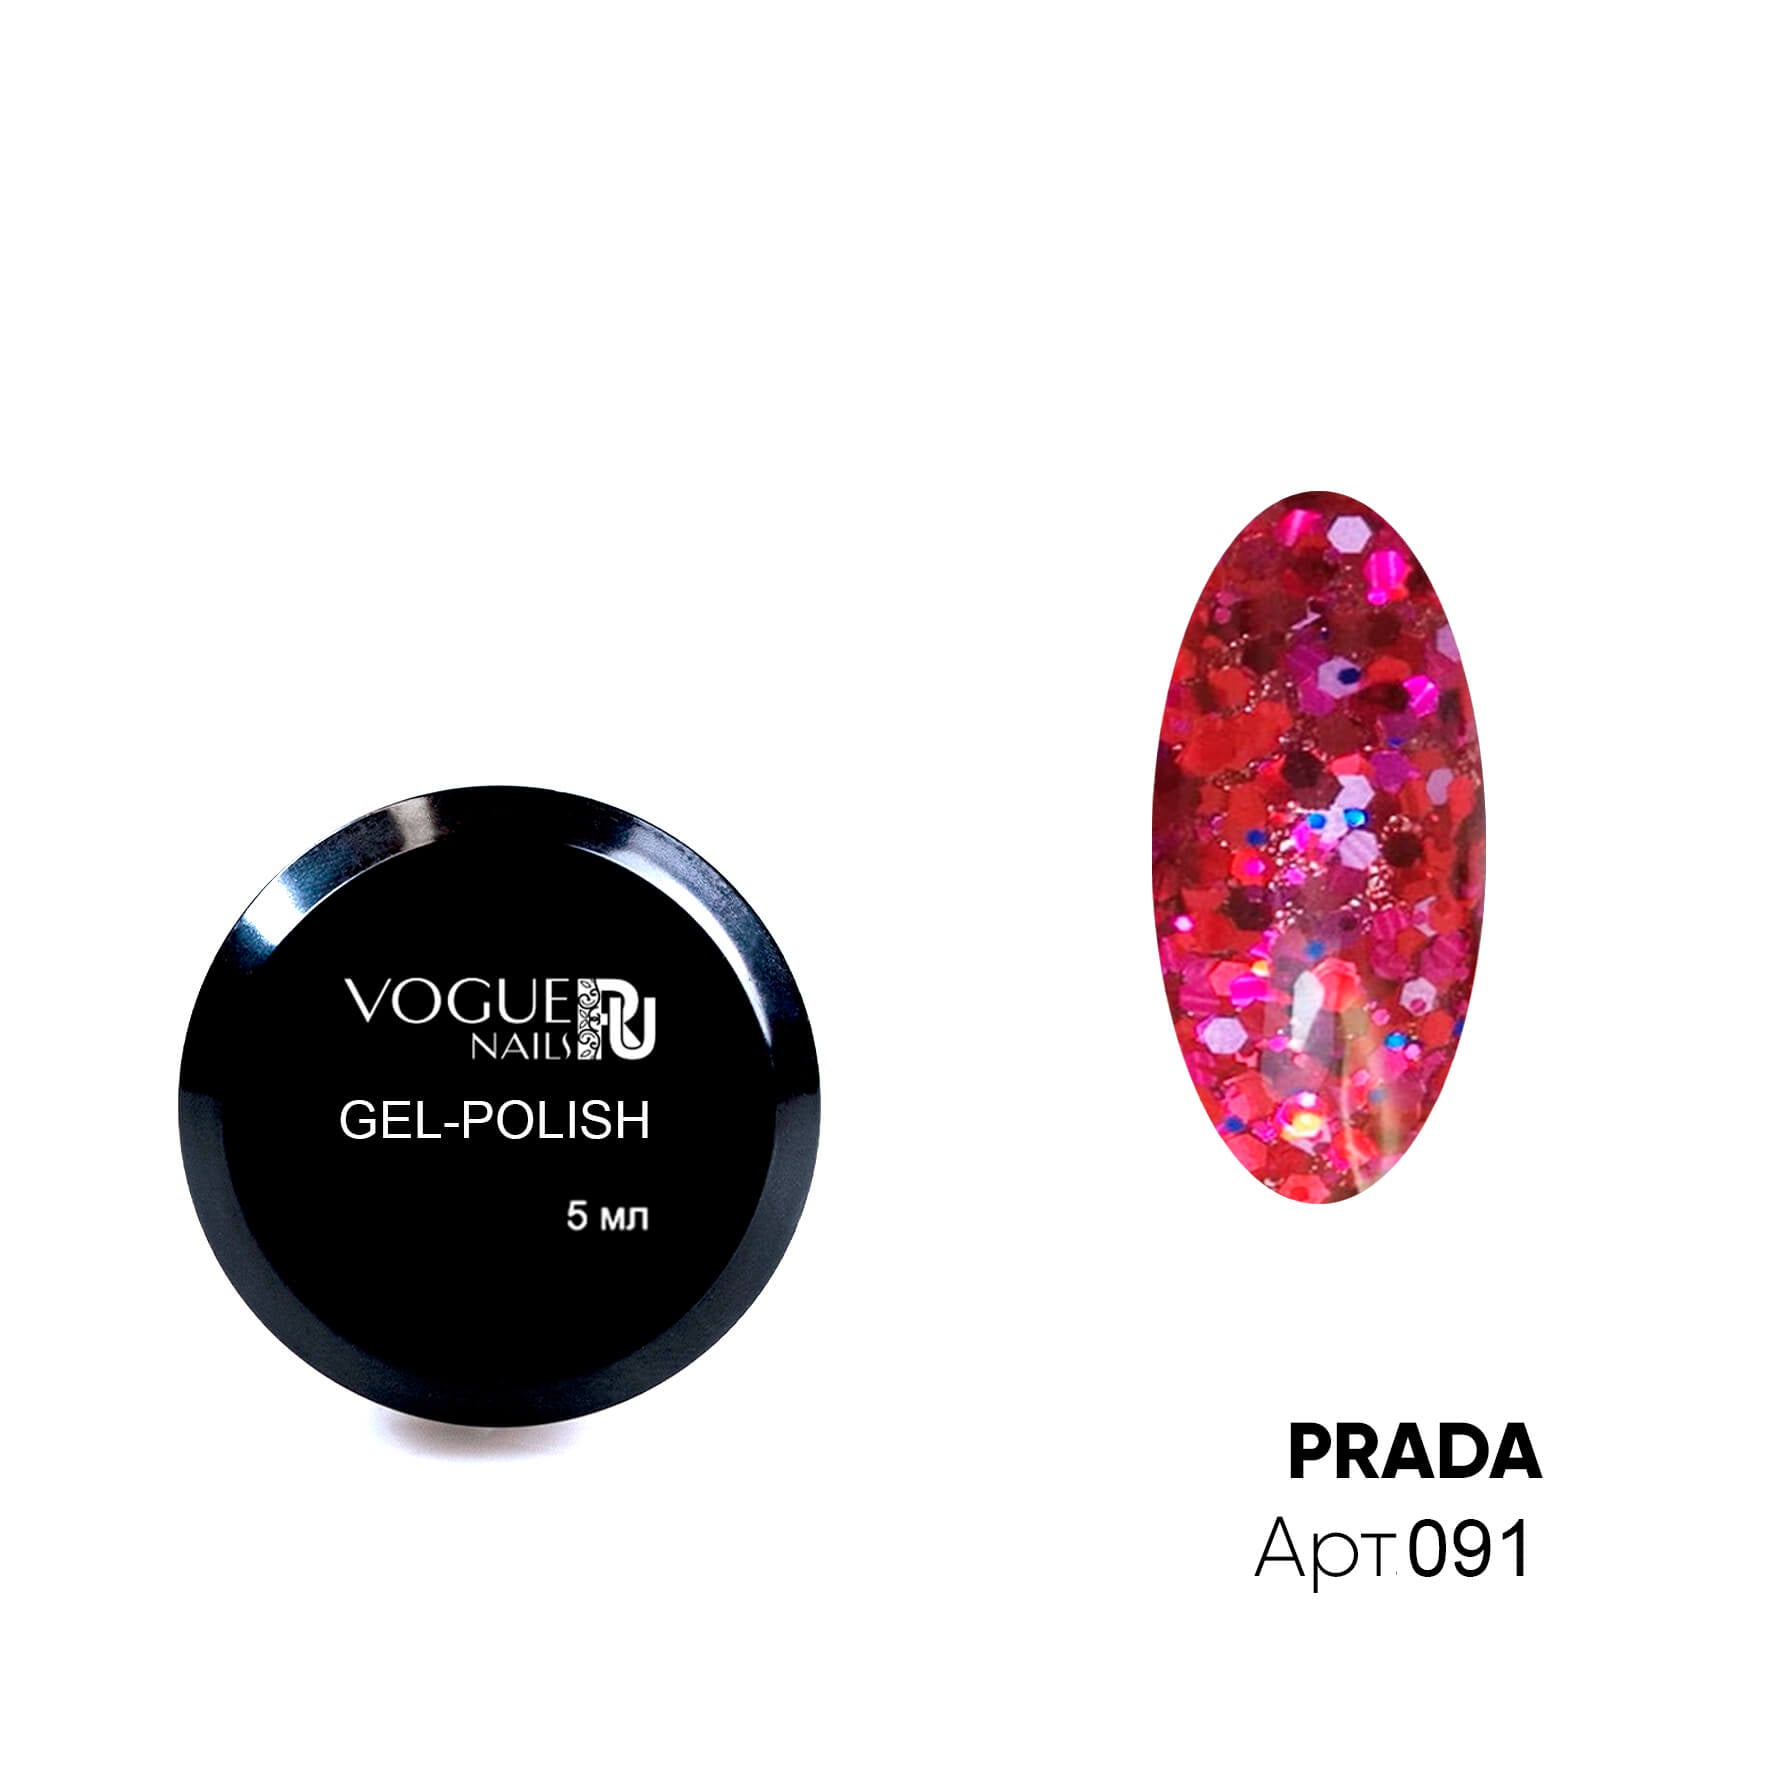 Vogue Nails "High Fashion Week" Gel Glitter - #6